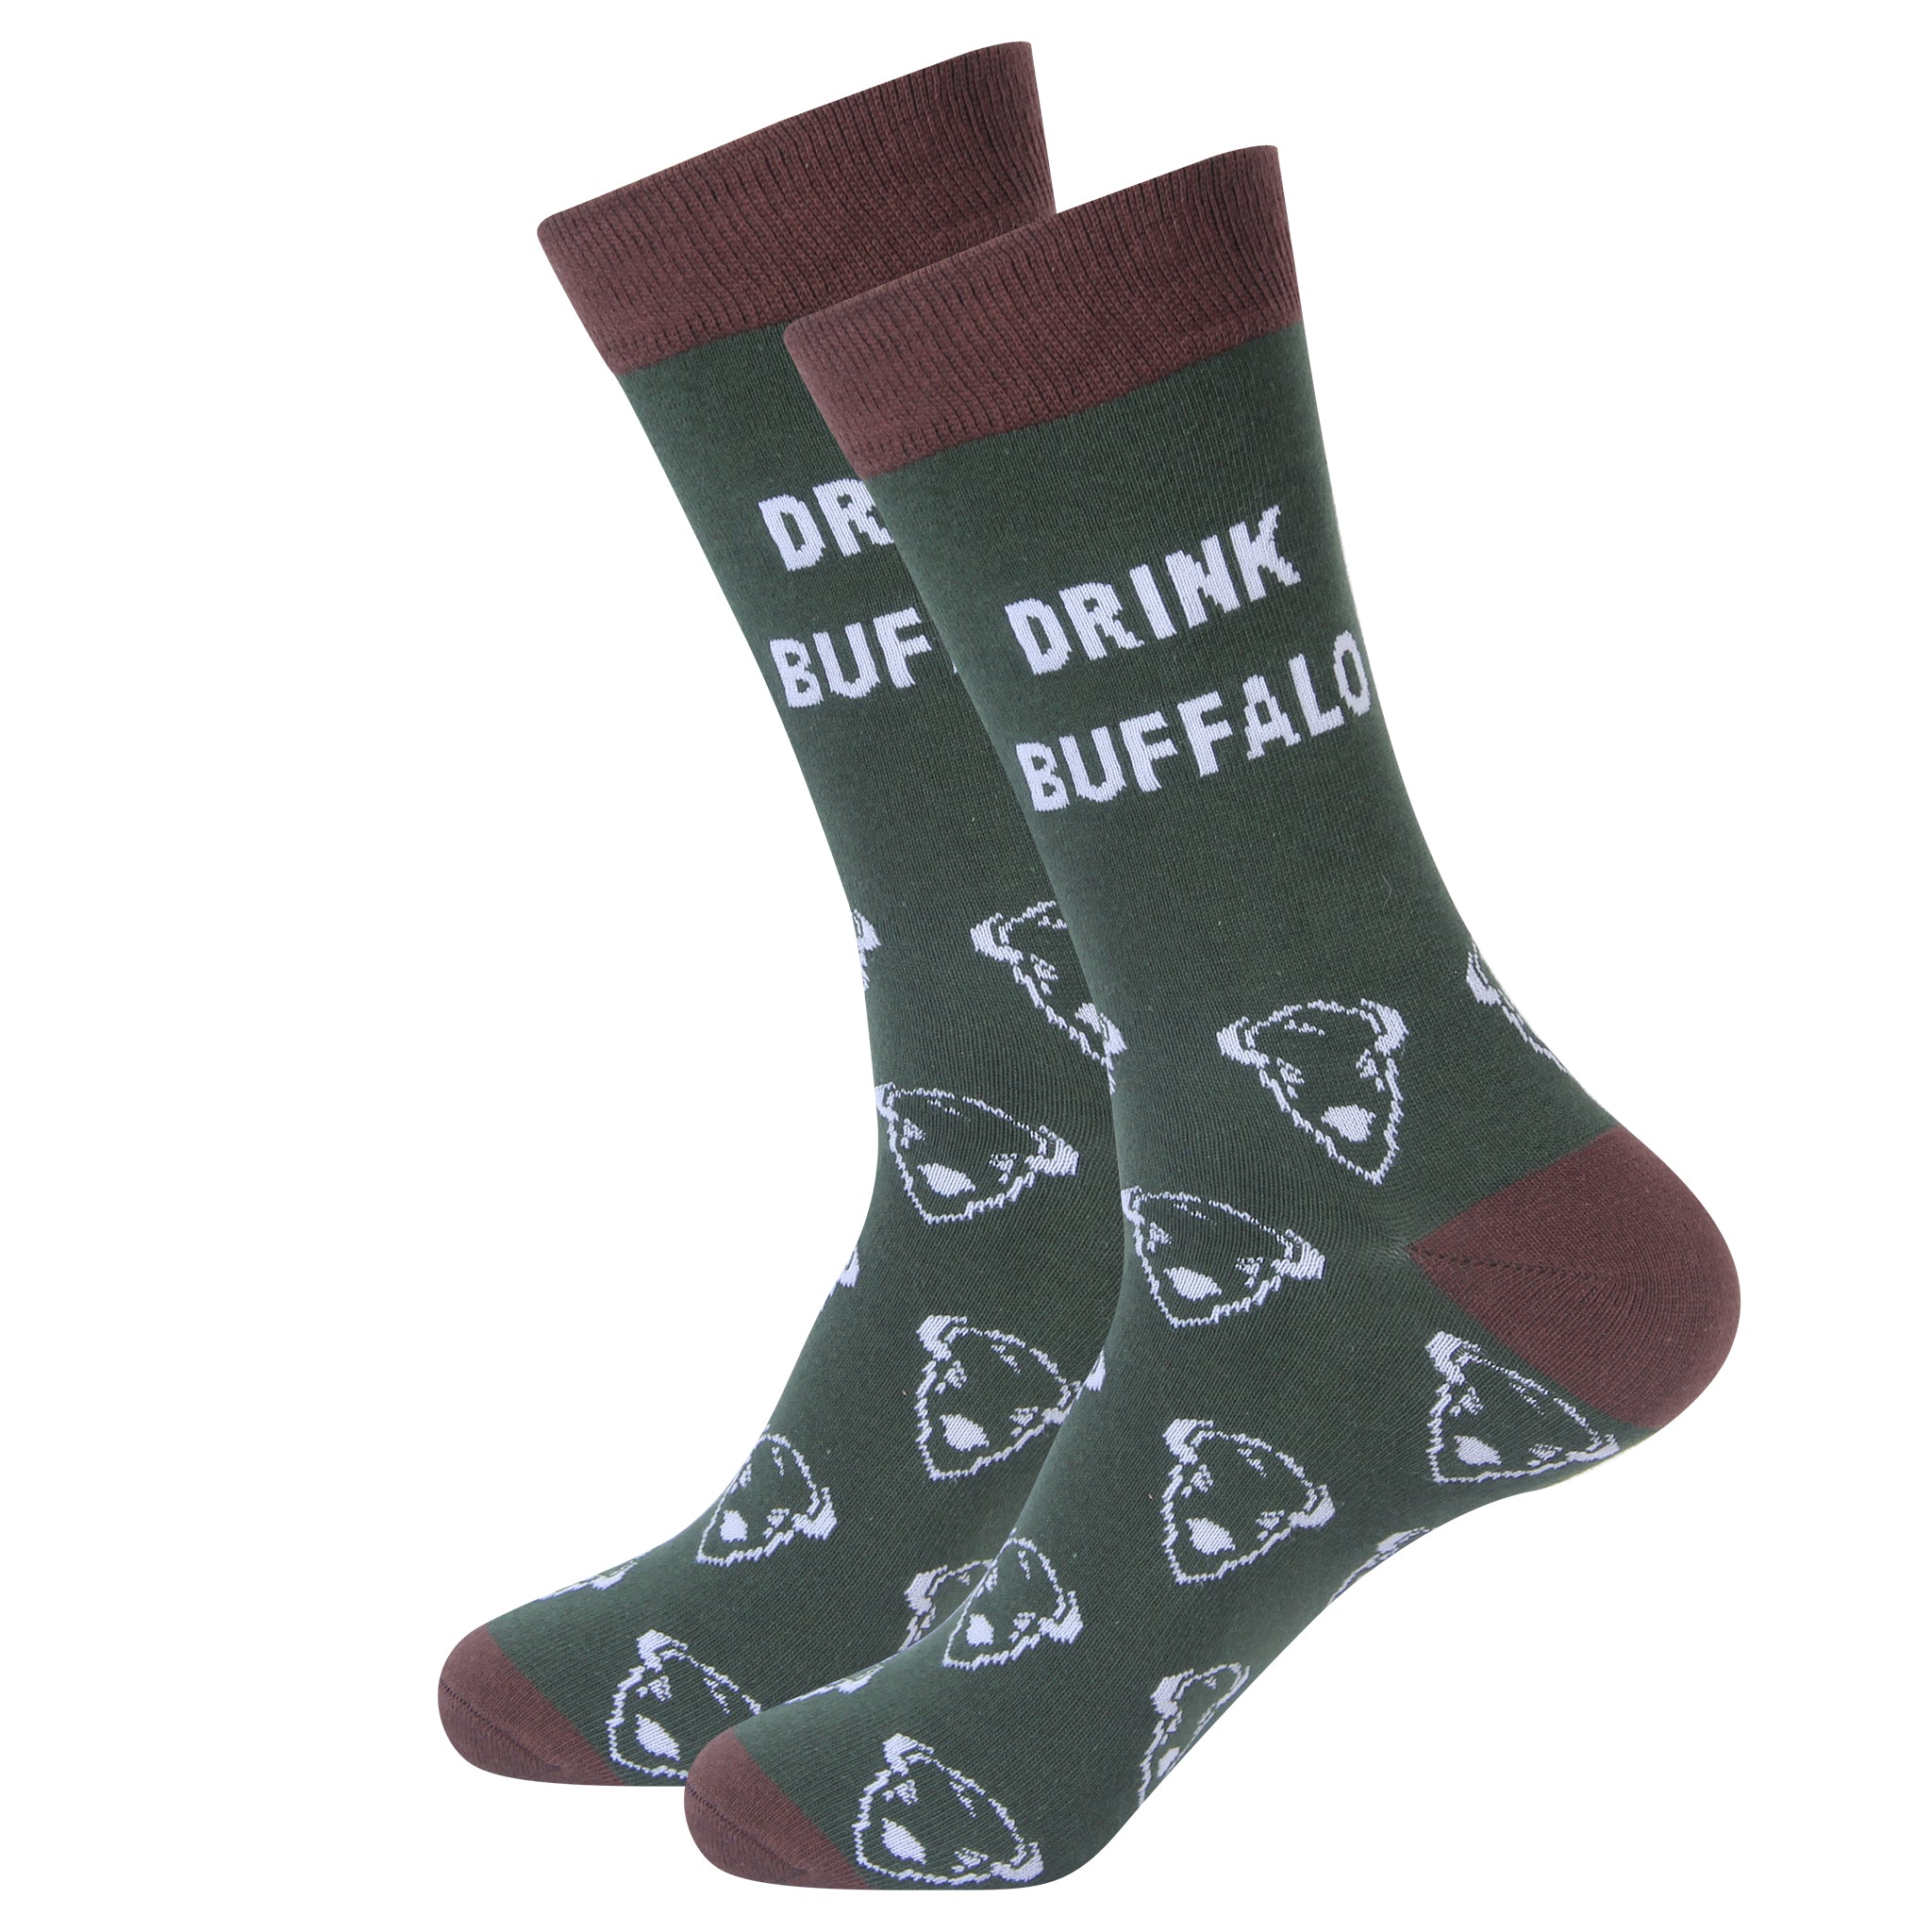 Drink Buffalo Socks